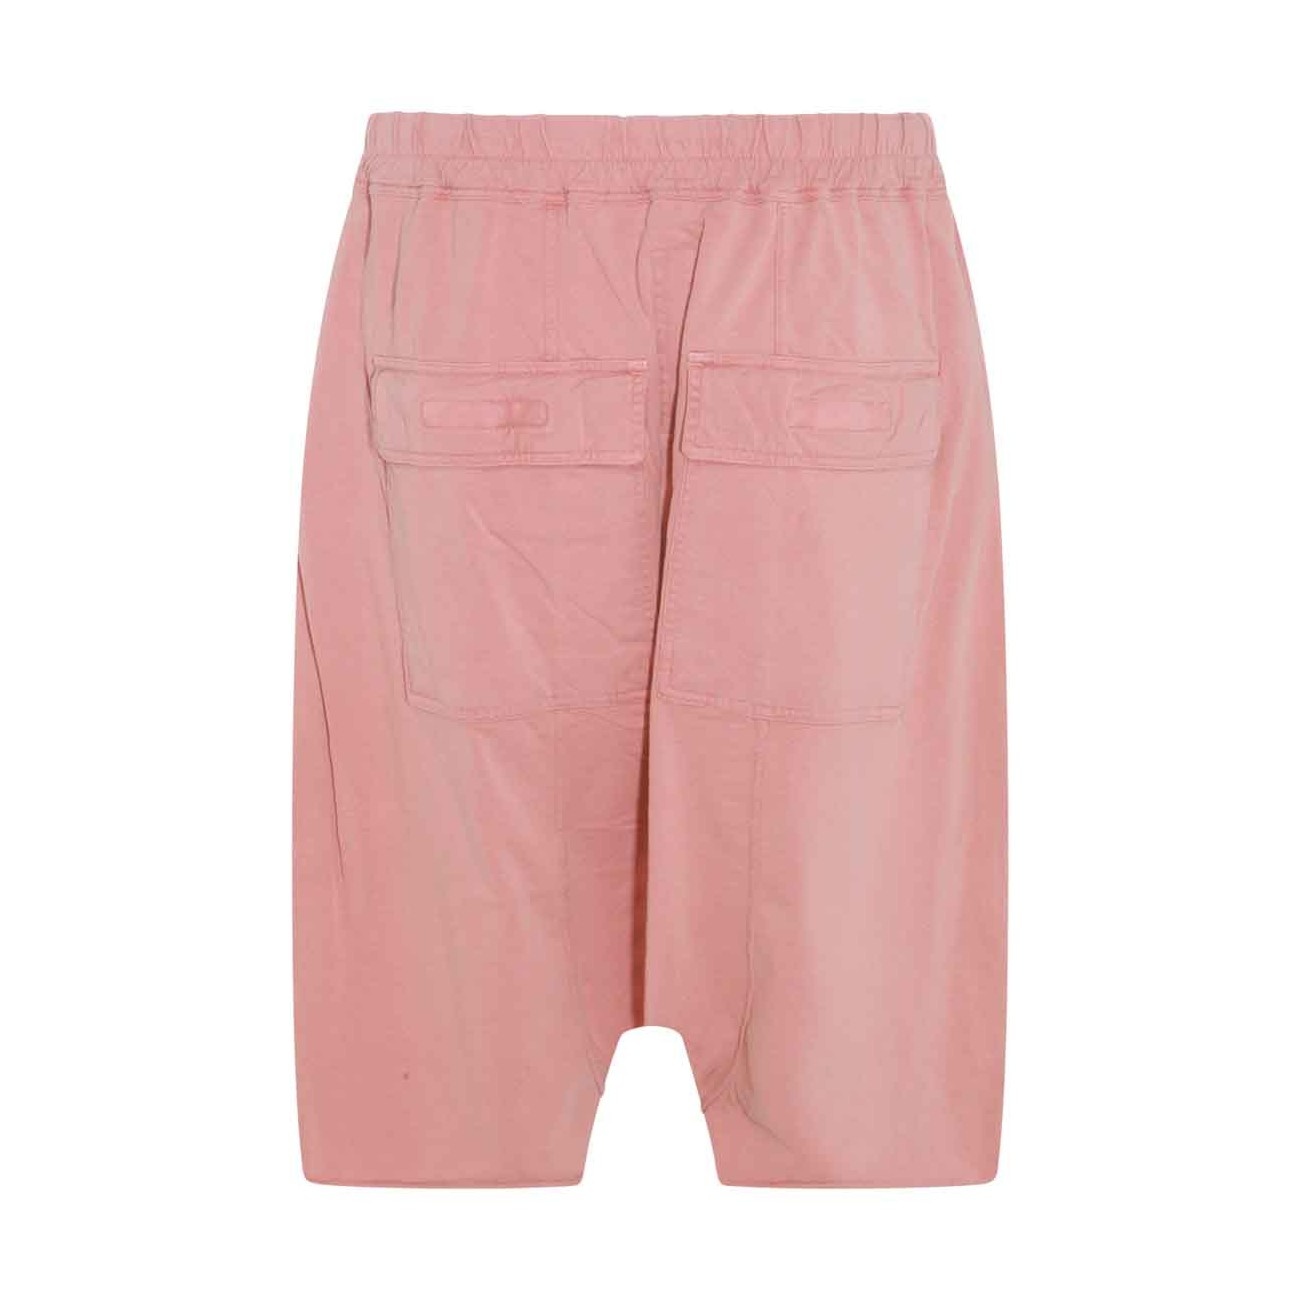 pink cotton shorts - 2